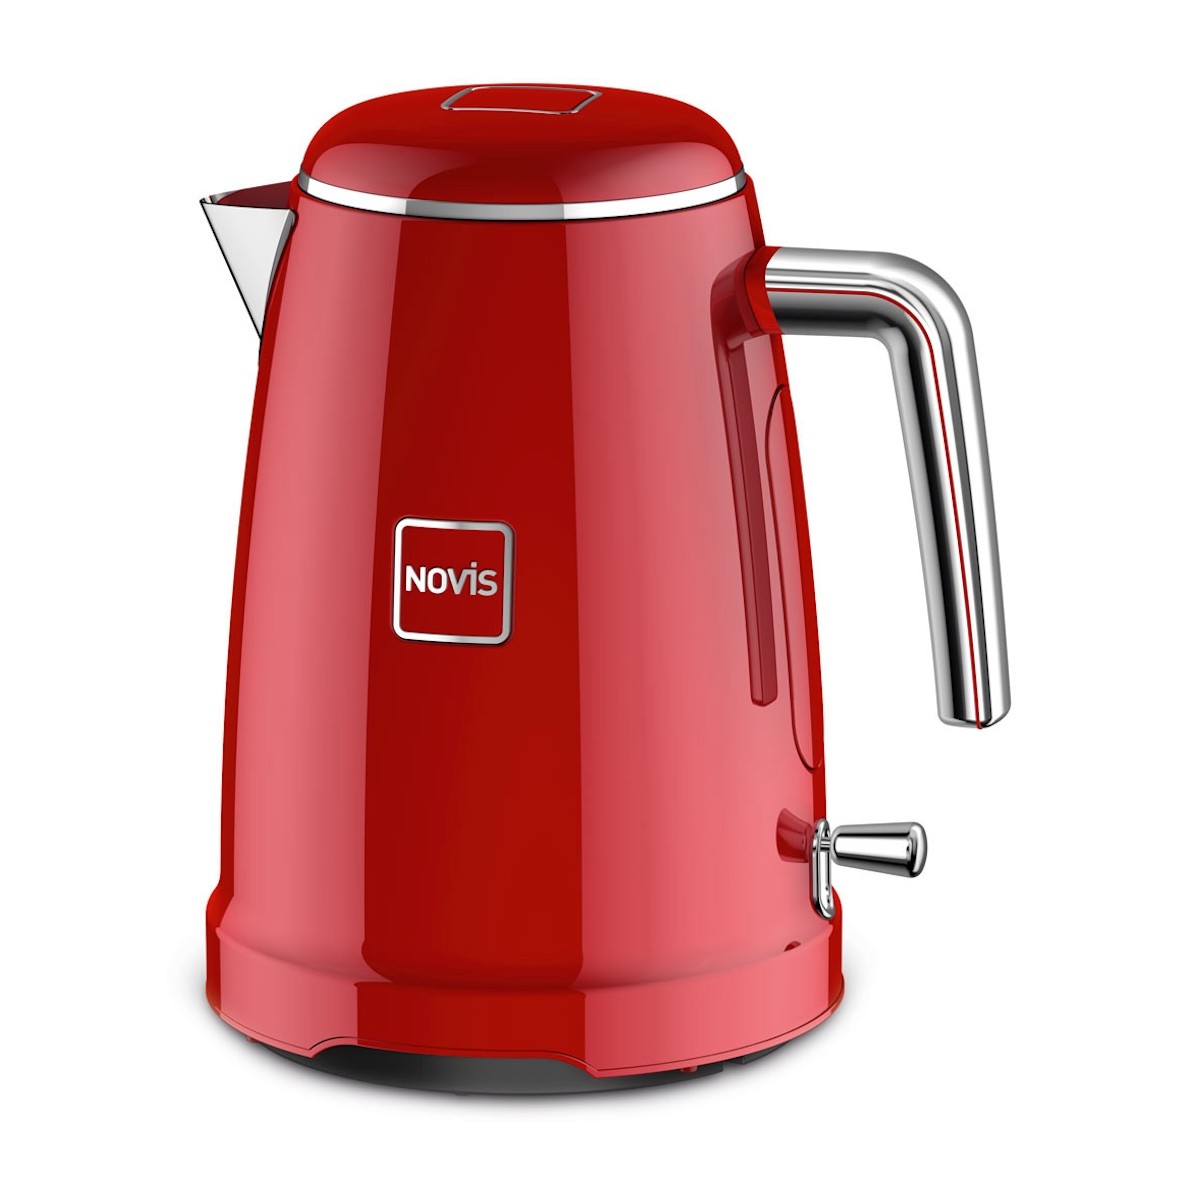 NOVIS K1 electric kettle - red